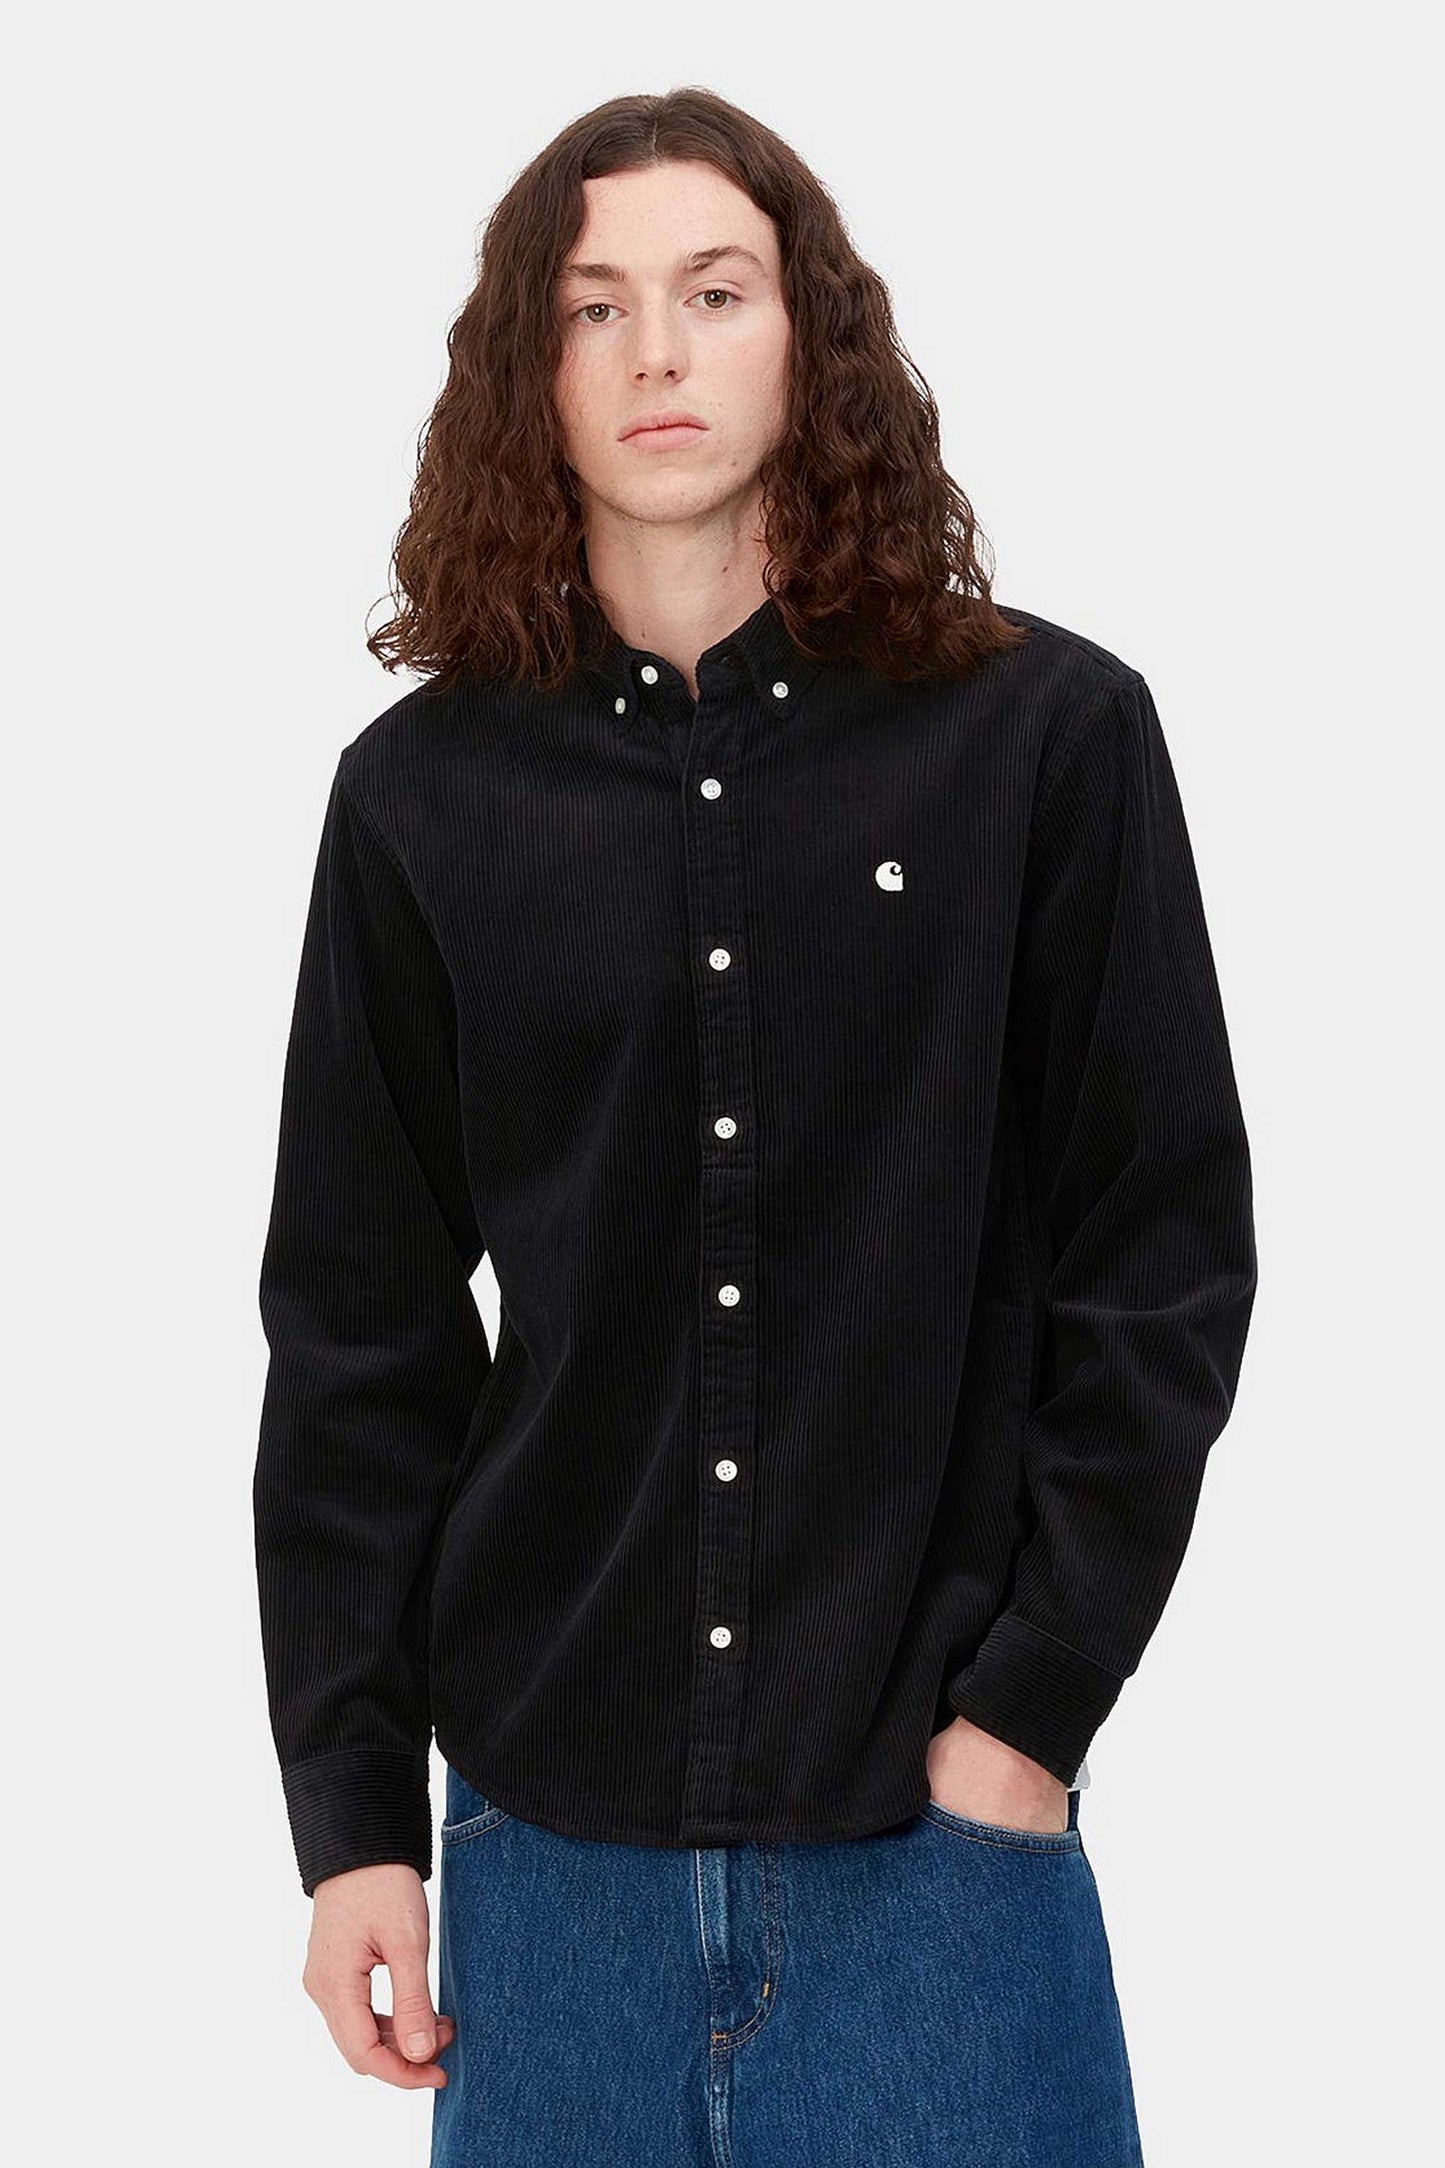 Pukas-Surf-Shop-carhartt-shirt-madison-cord-shirt-black